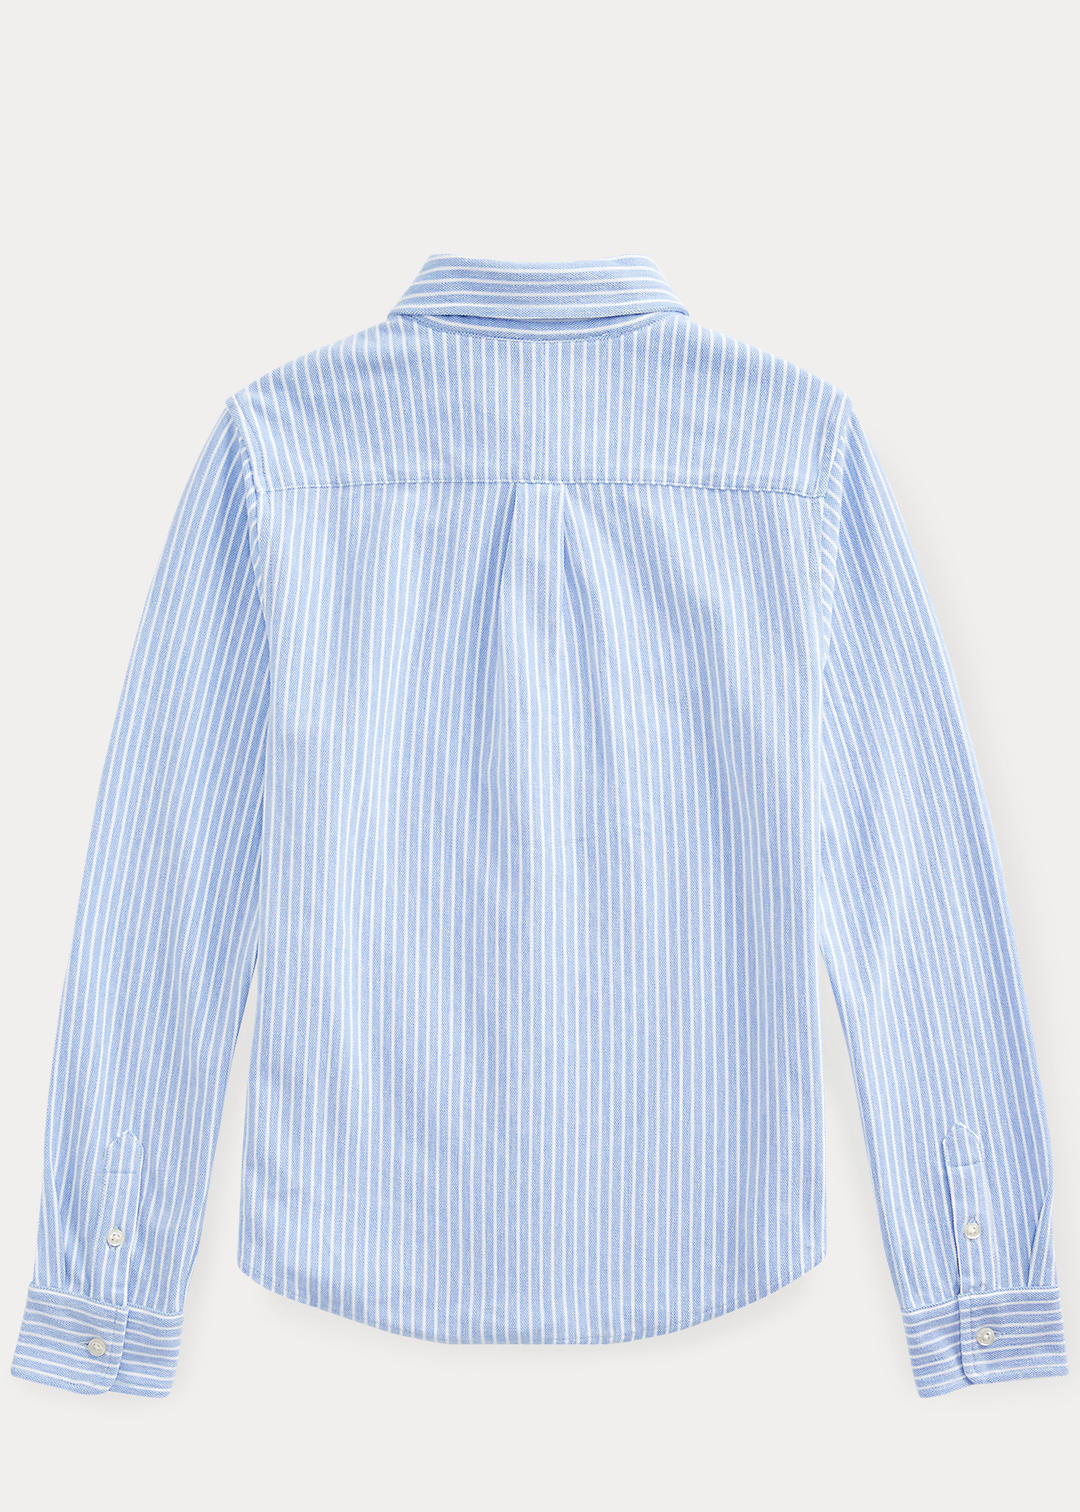 BOYS 6-14 YEARS Knit Cotton Oxford Shirt 2